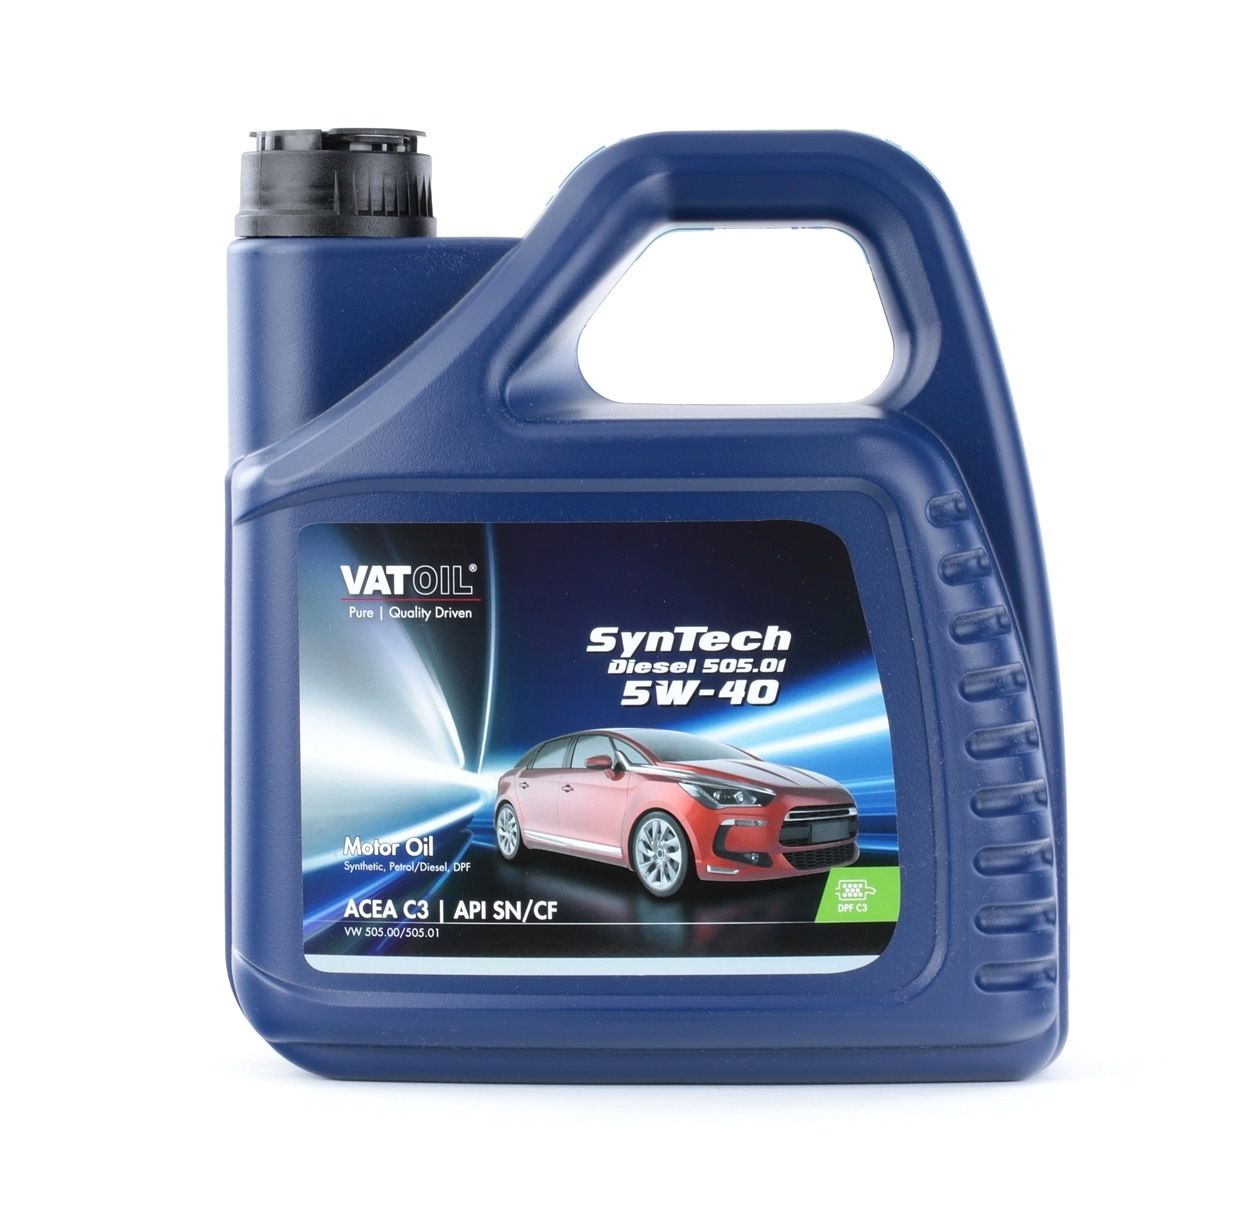 Buy Automobile oil VATOIL petrol 50045 SynTech, Diesel 505.01 5W-40, 4l, Synthetic Oil